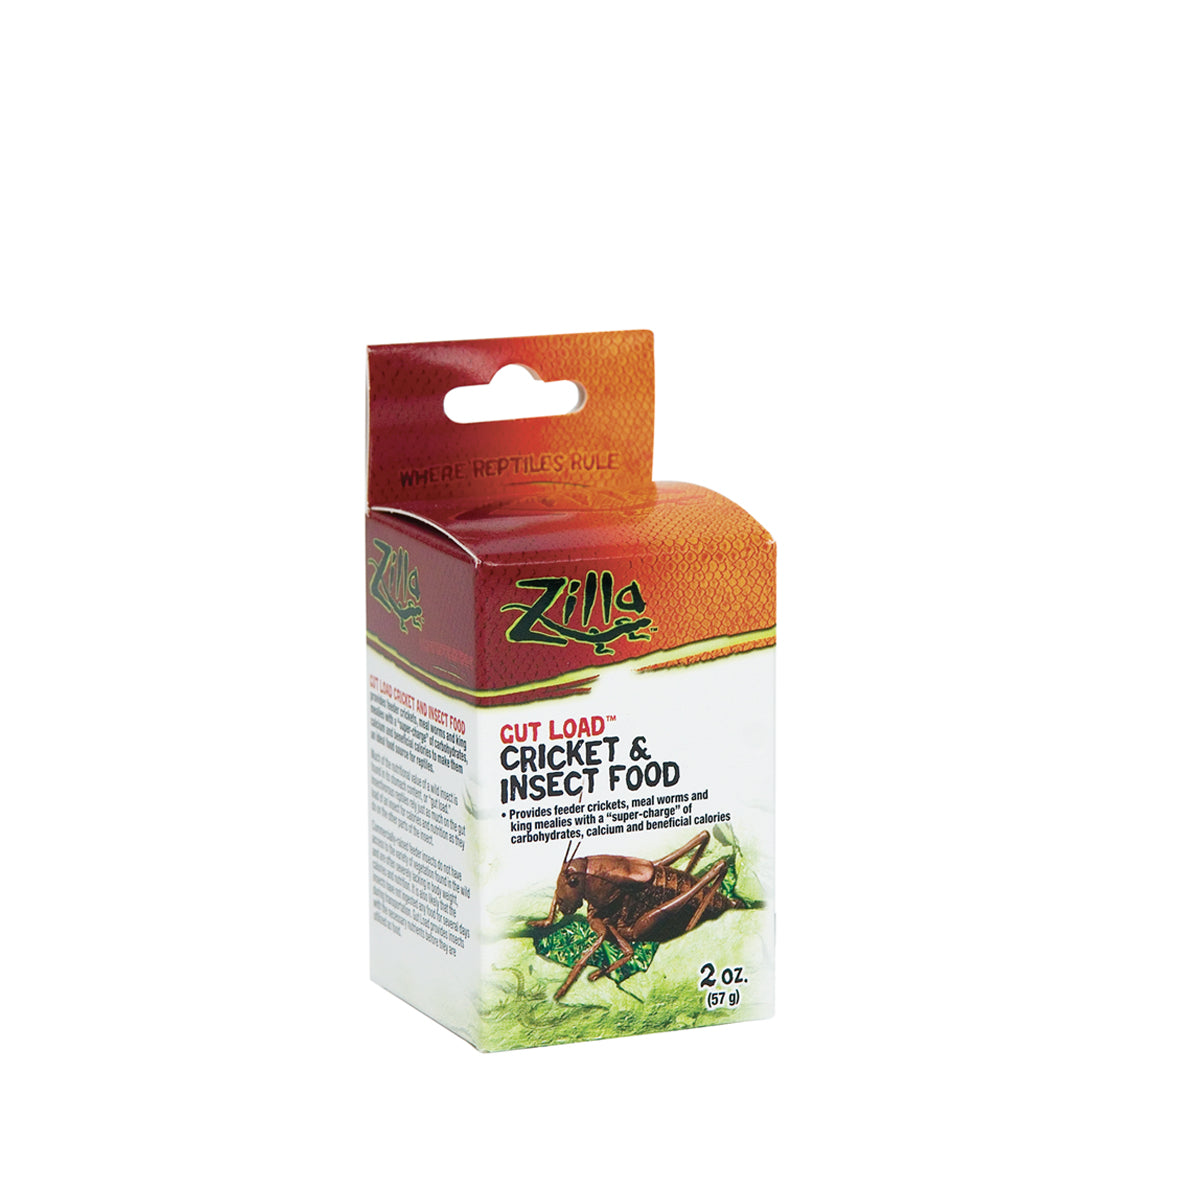 Zilla Gut Load Cricket & Insect Food - 2 oz